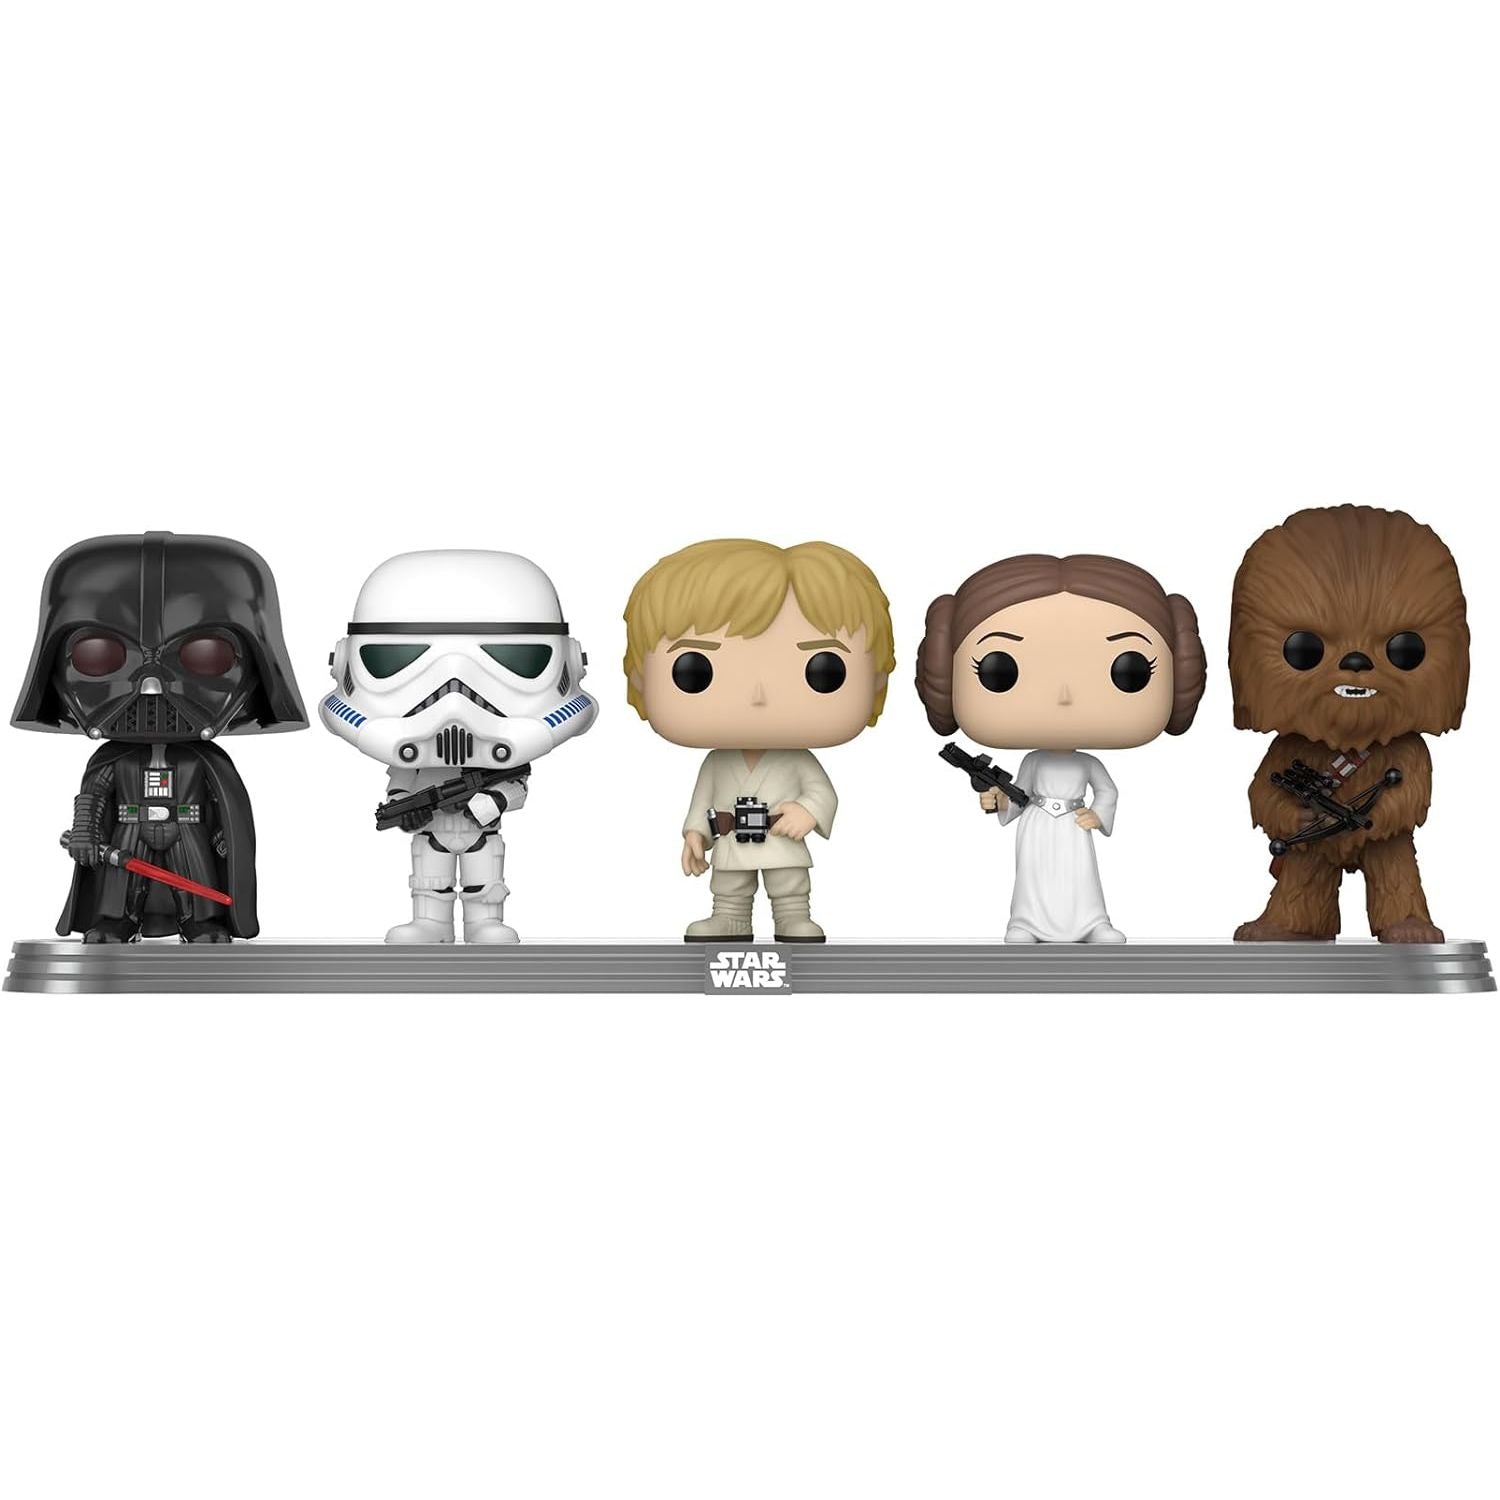 Funko Pop! Vinyl: Star Wars - Darth Vader, Stormtrooper, Luke Skywalker, Princess Leia and Chewbacca - 5 Pack